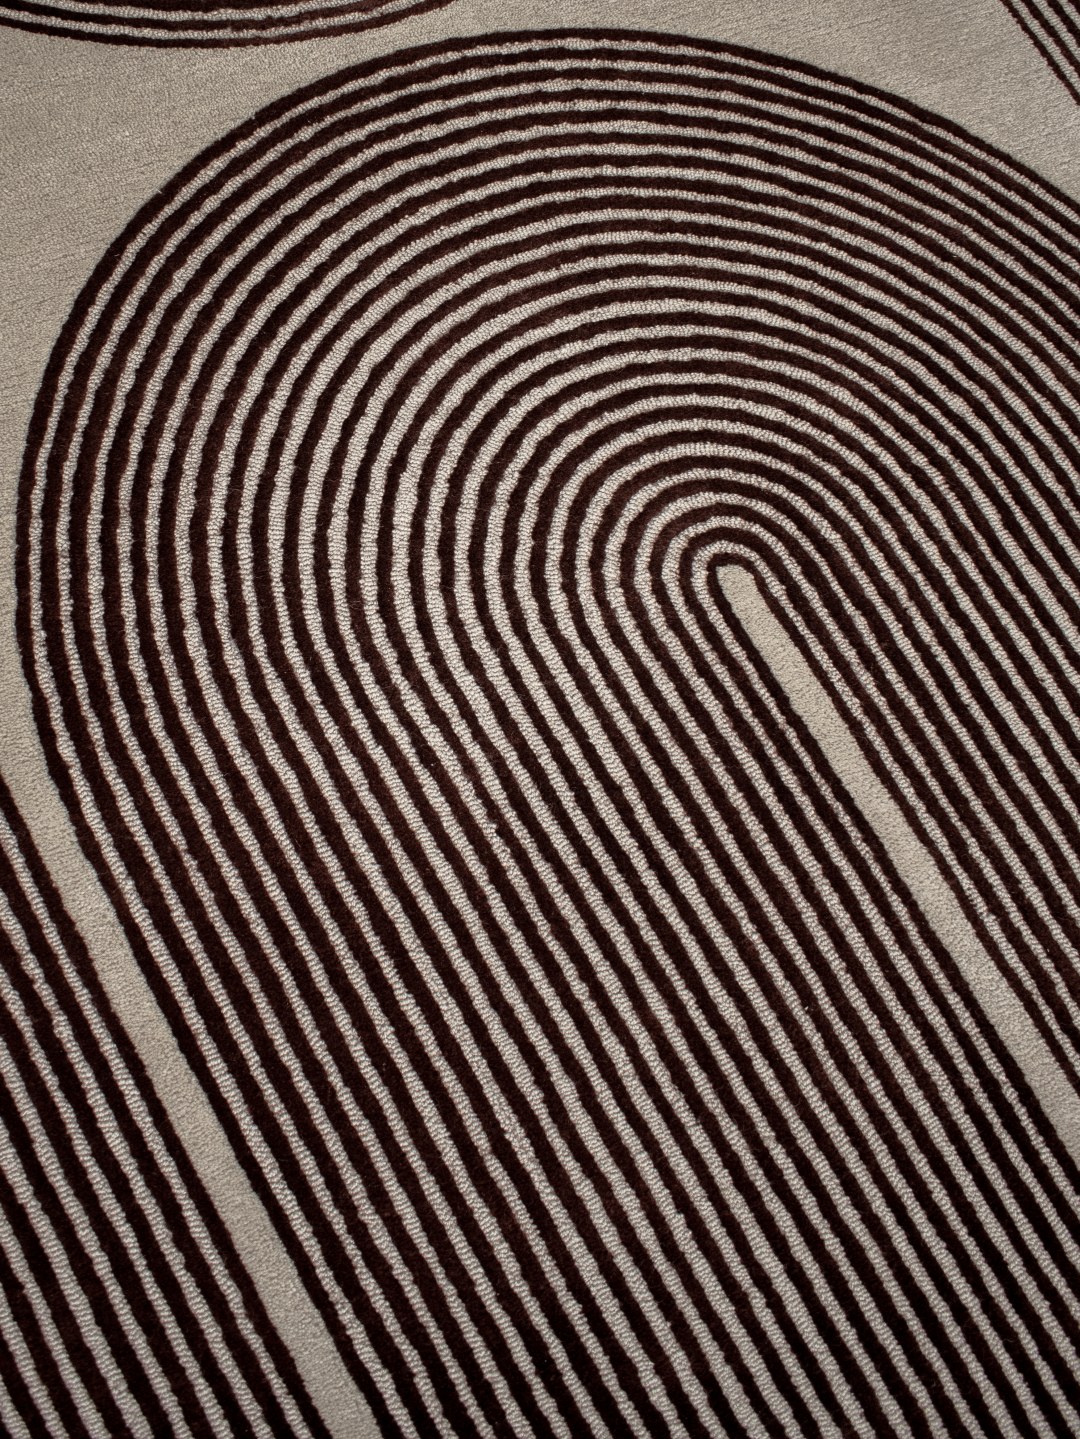 Viper Pattern Rug in Maroon Linework details